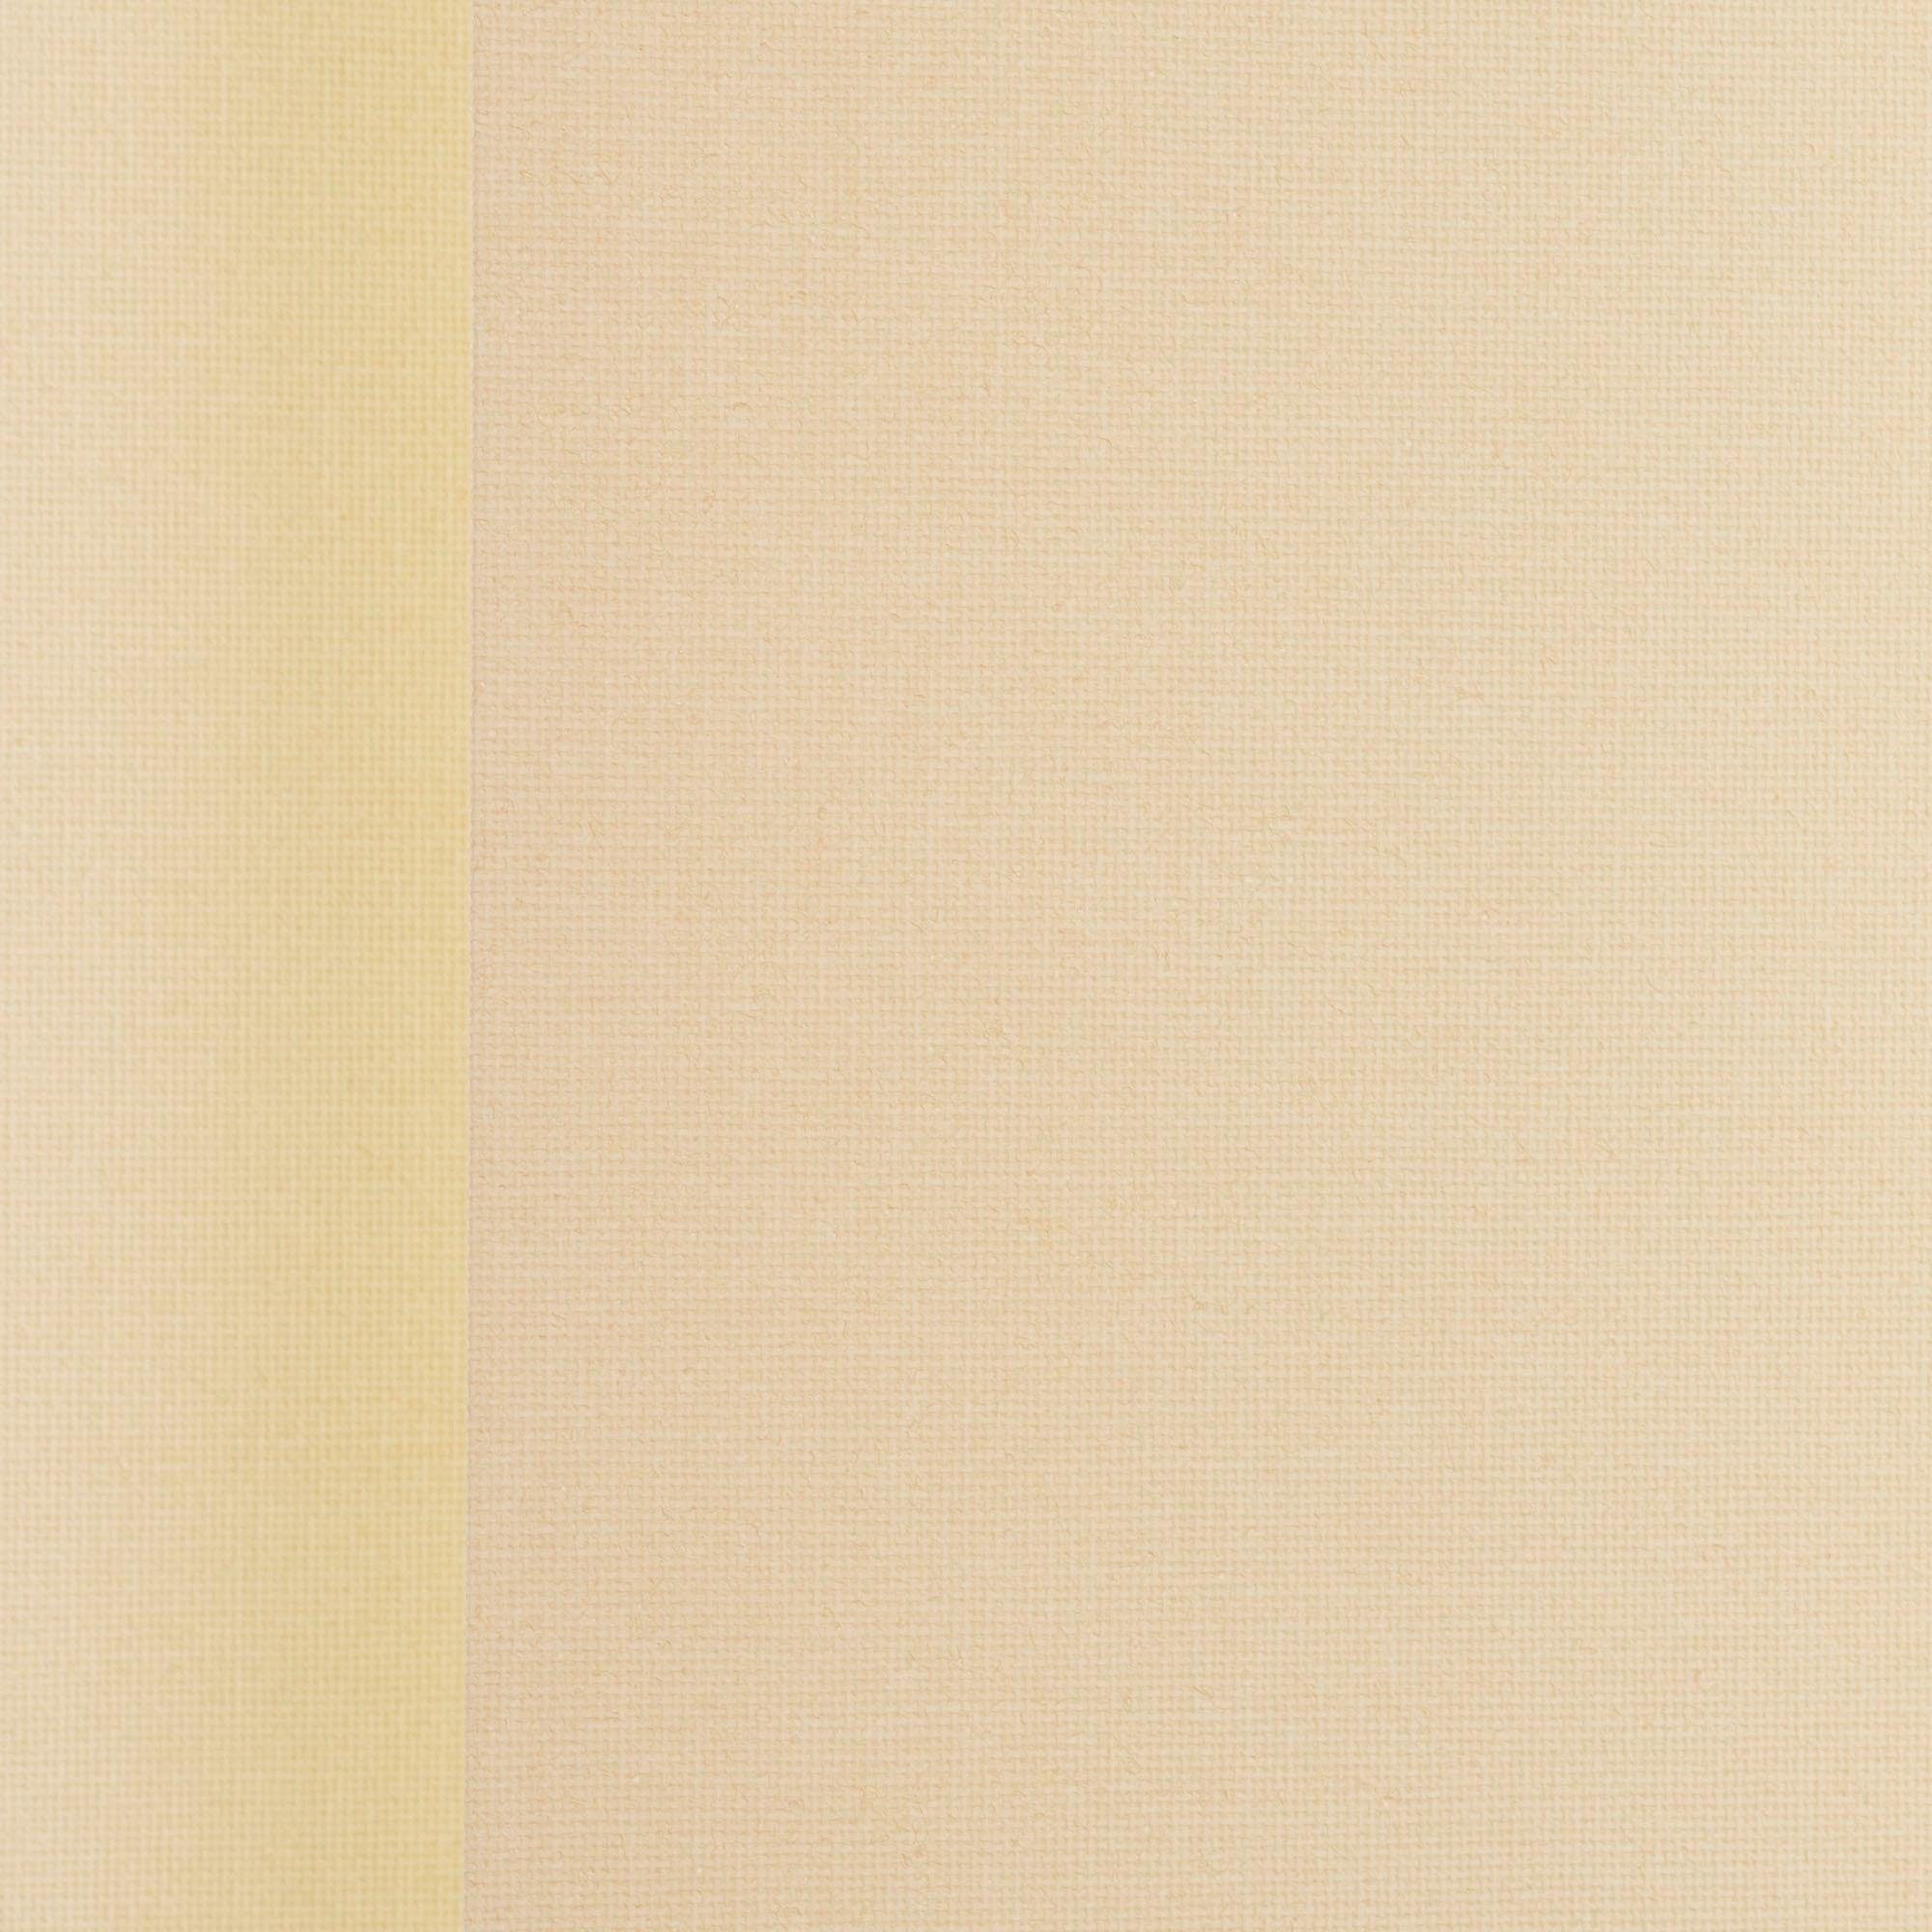 Lamellenvorhang Lamellenvorhang Vertikalanlage perlex - Kürzbare Liedeco, beige Lamelle, Vertikalanlage freihängend, mm 89 Perlex